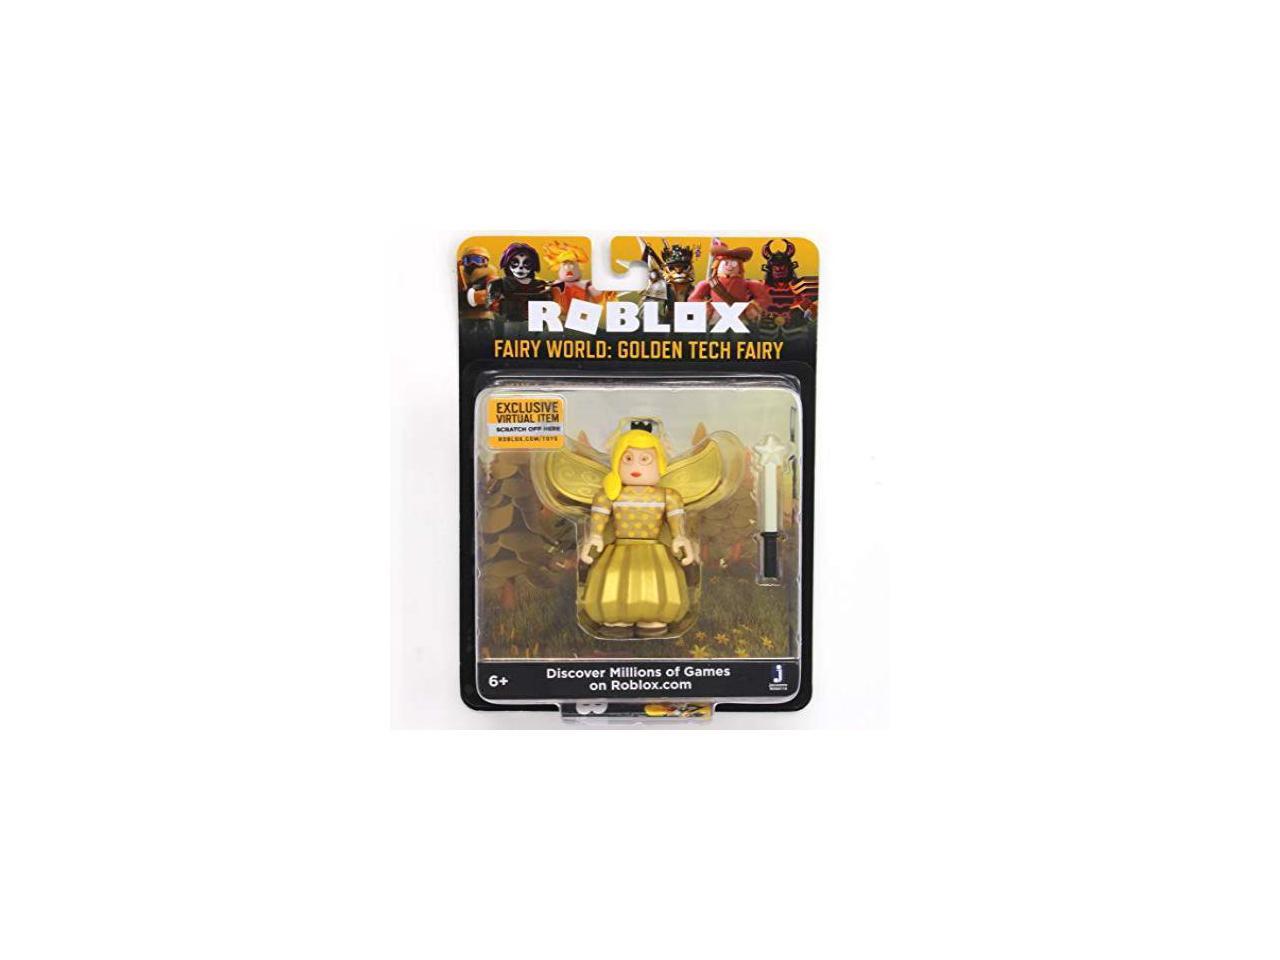 Roblox Fairy World Golden Tech Fairy 2 75 Inch Figure With Exclusive Virtual Item Code Newegg Com - golden roblox card